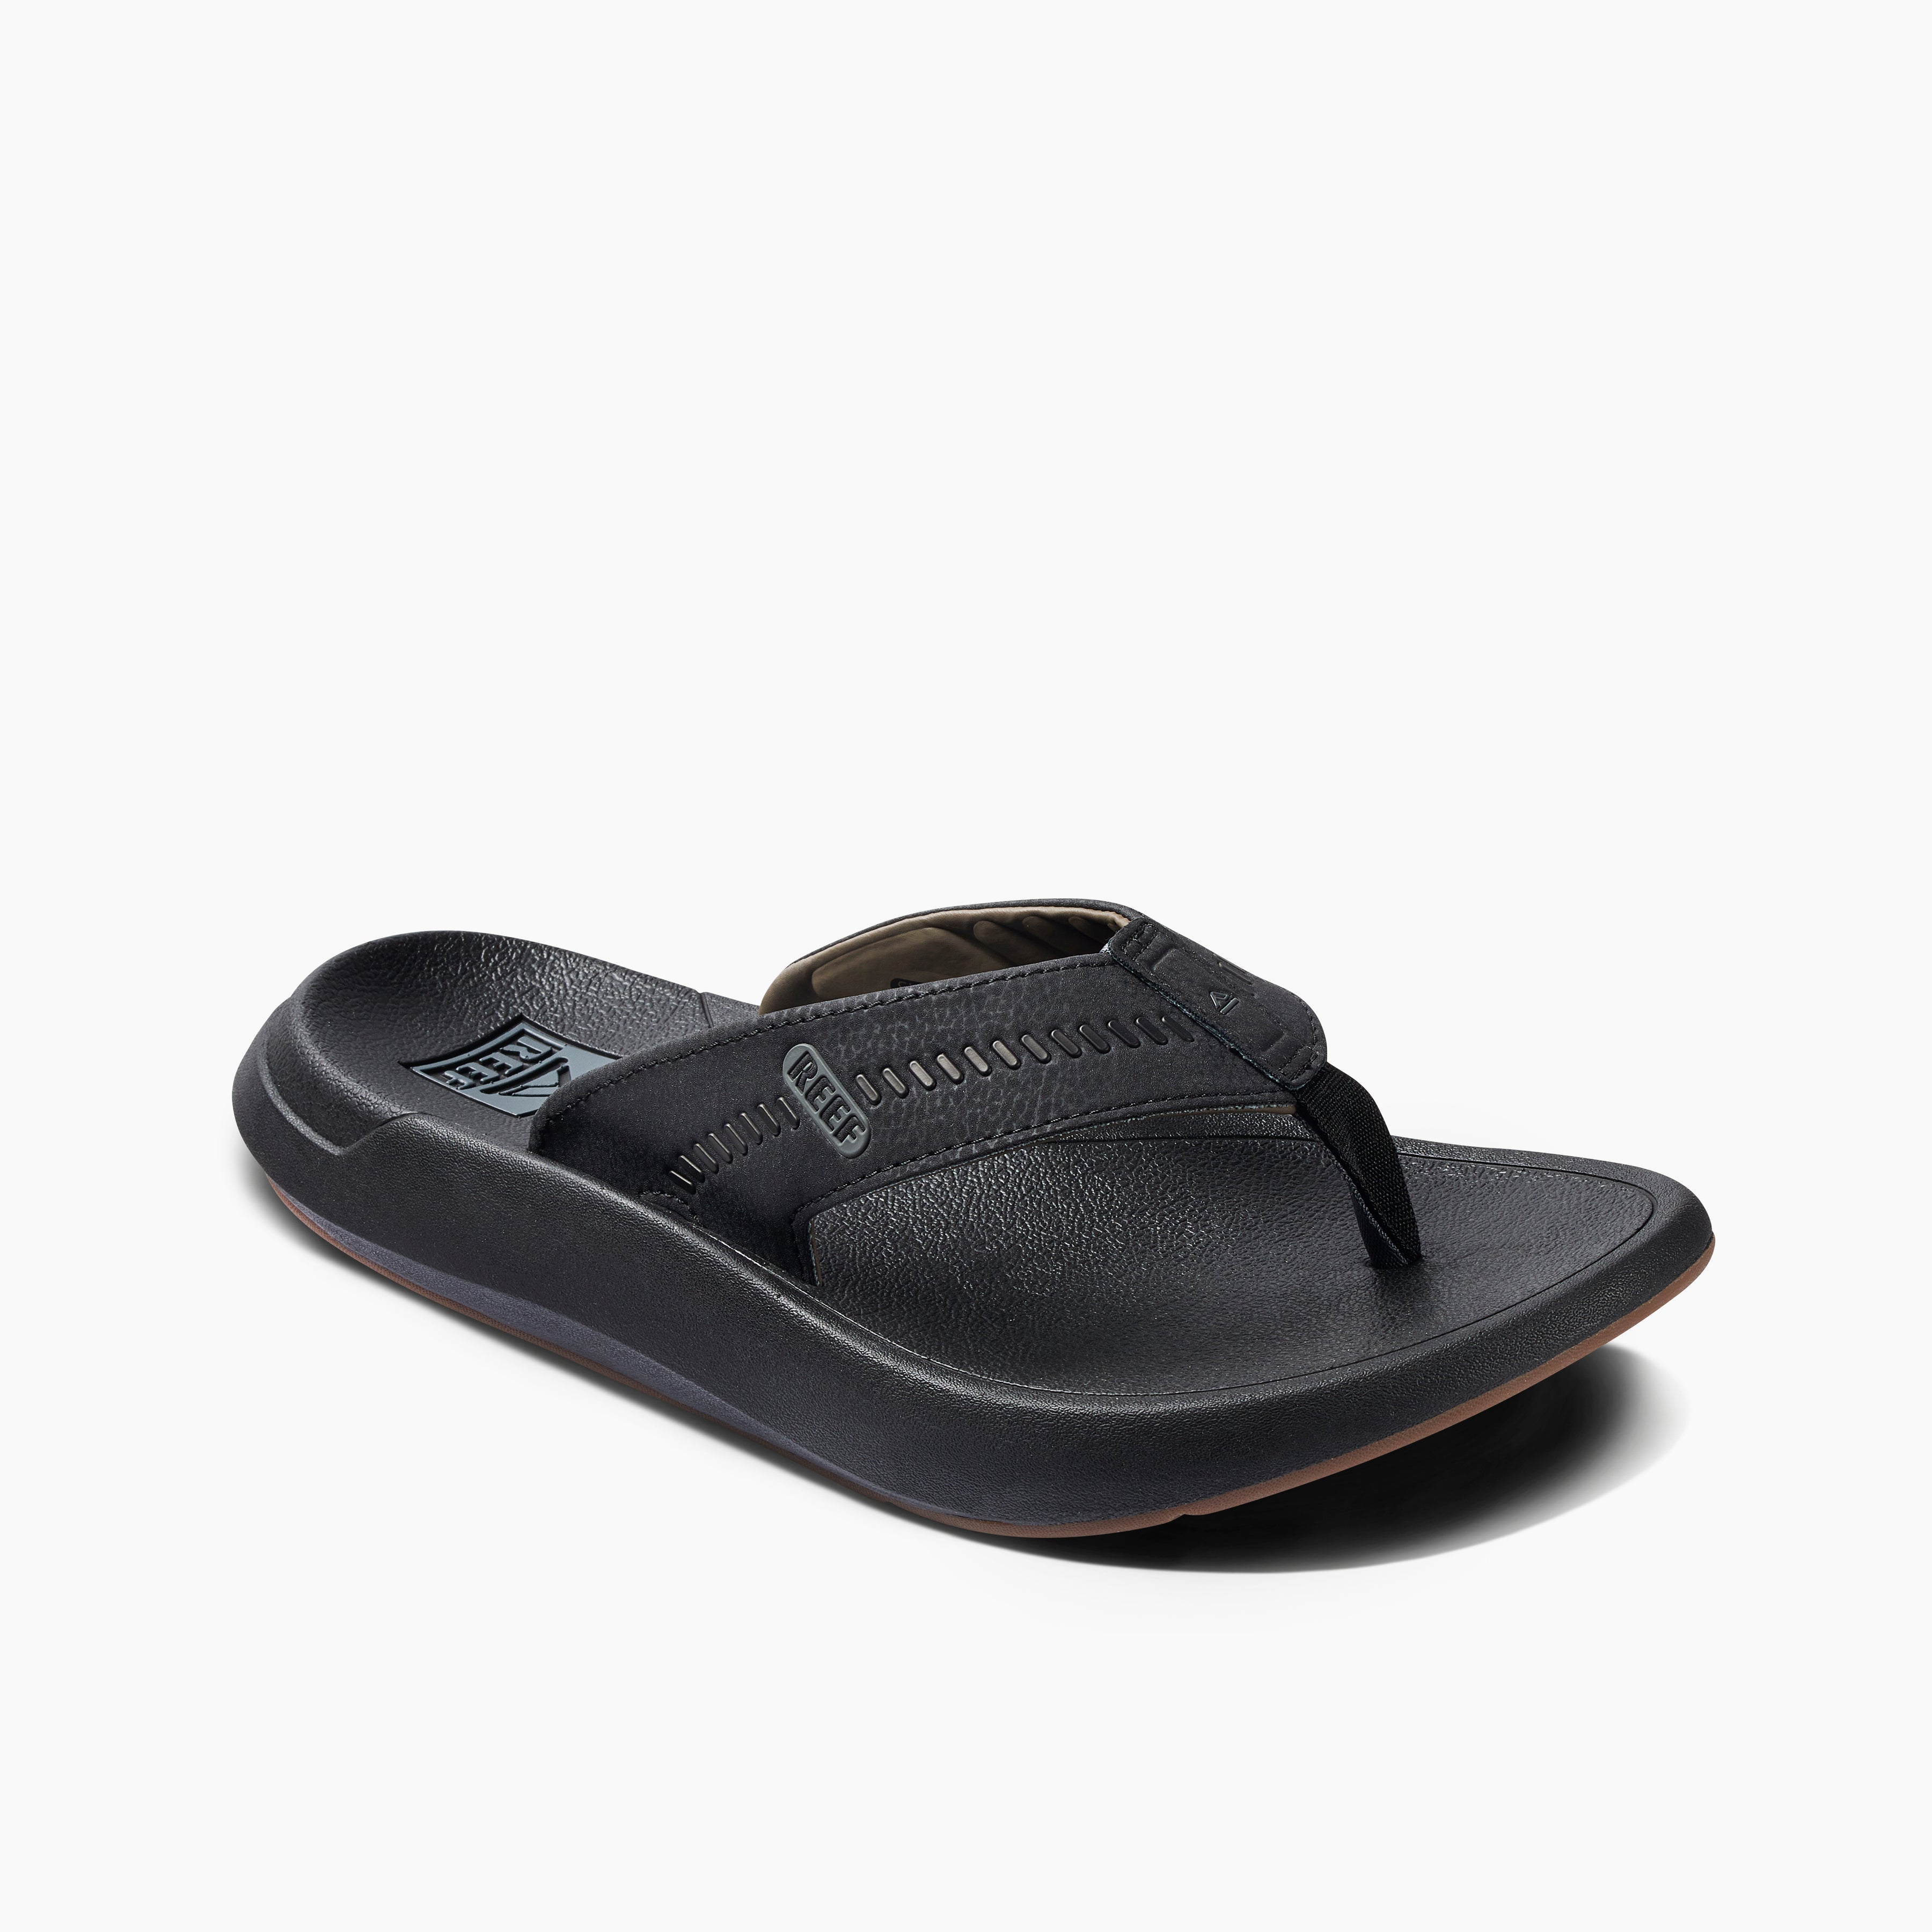 Men's Sandals SWELLsole Cruiser in Black/Grey | REEF®